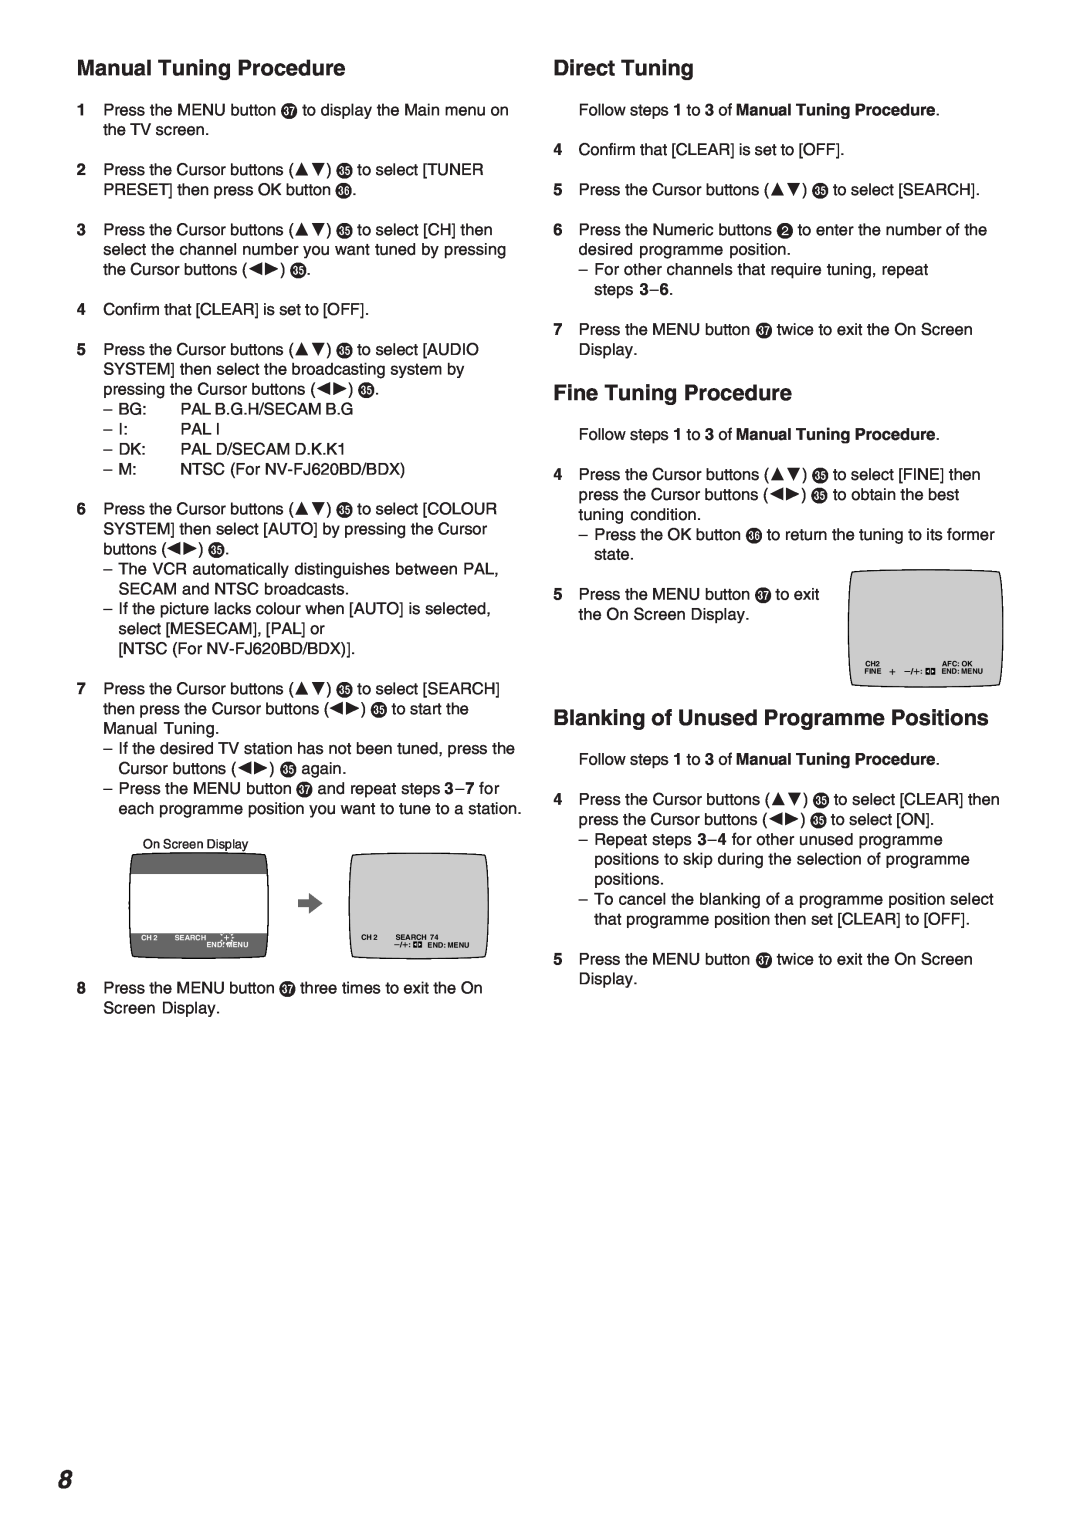 Panasonic NV-FJ625AM Manual Tuning Procedure, Direct Tuning, Fine Tuning Procedure, Blanking of Unused Programme Positions 